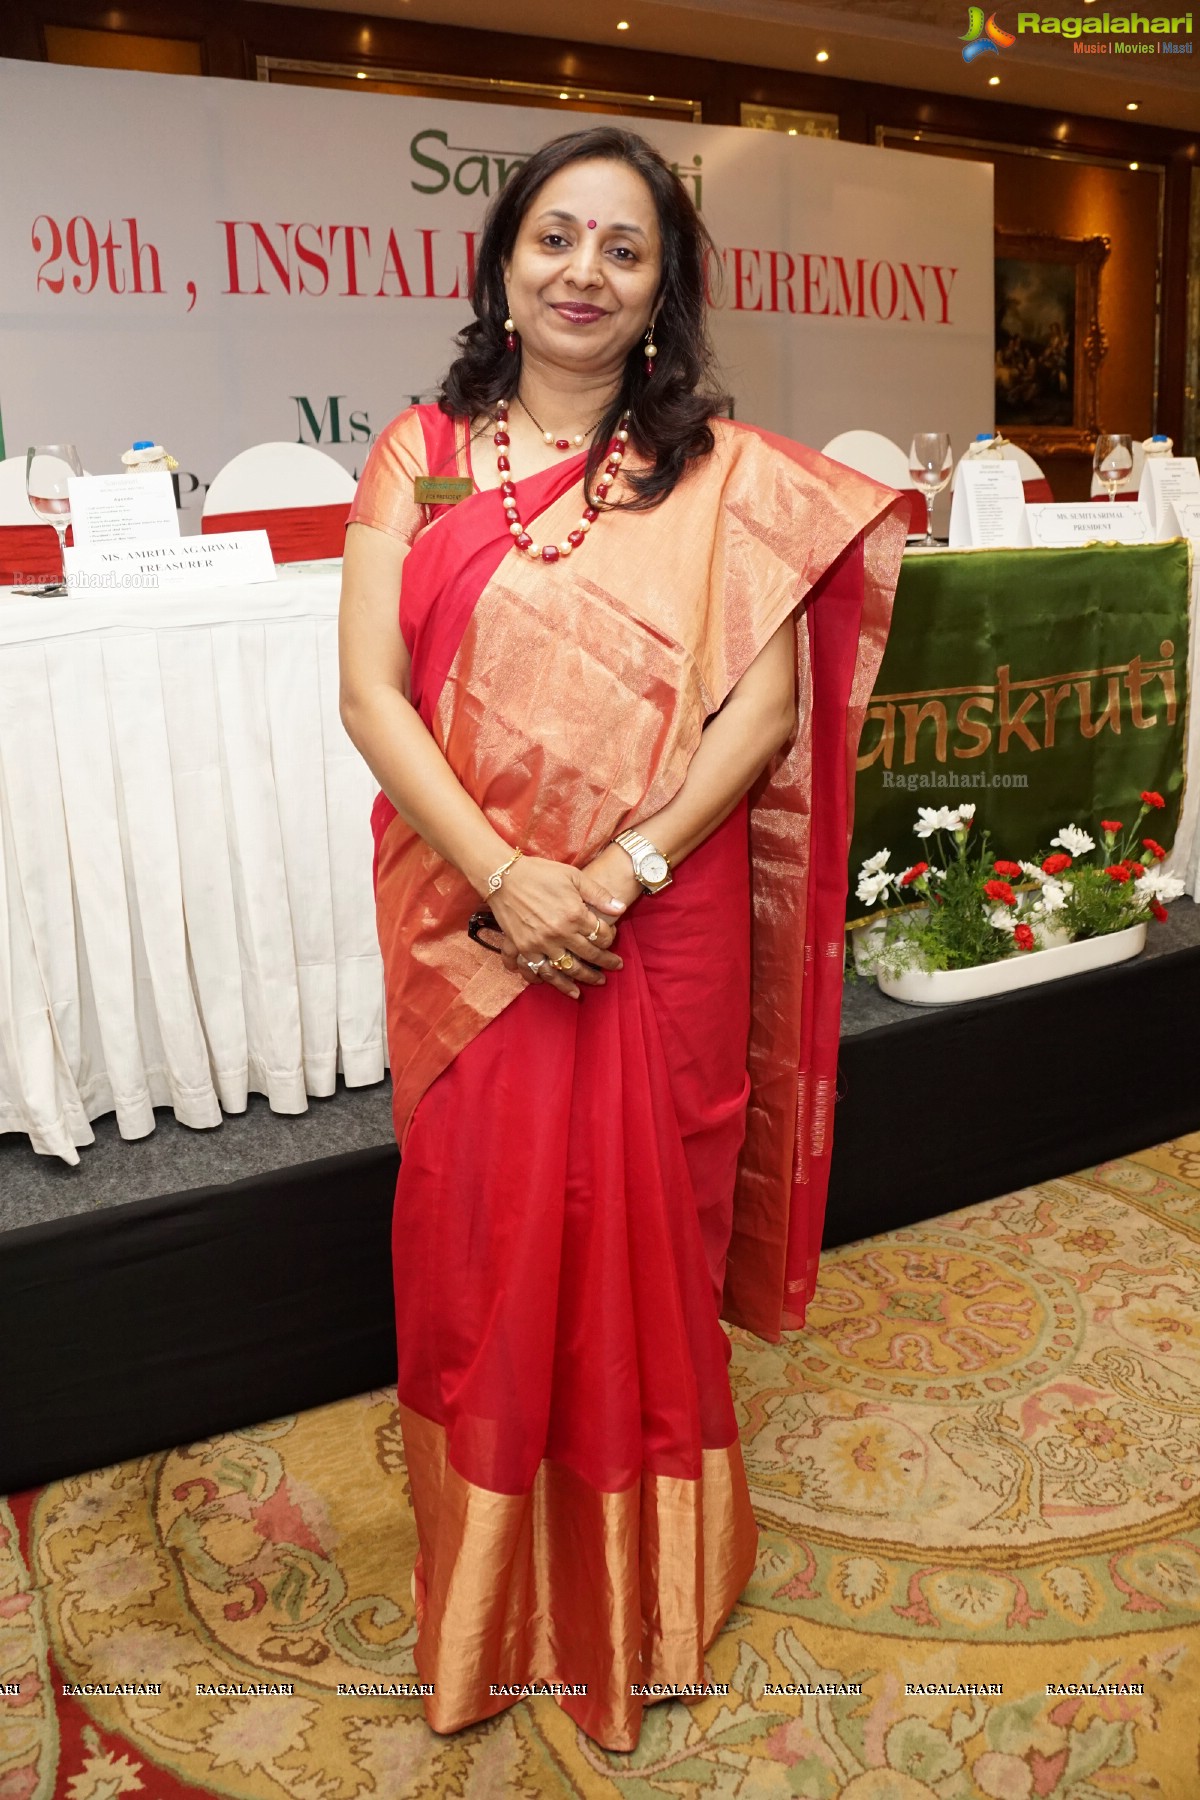 Sanskruti Ladies Club 29th Installation Ceremony